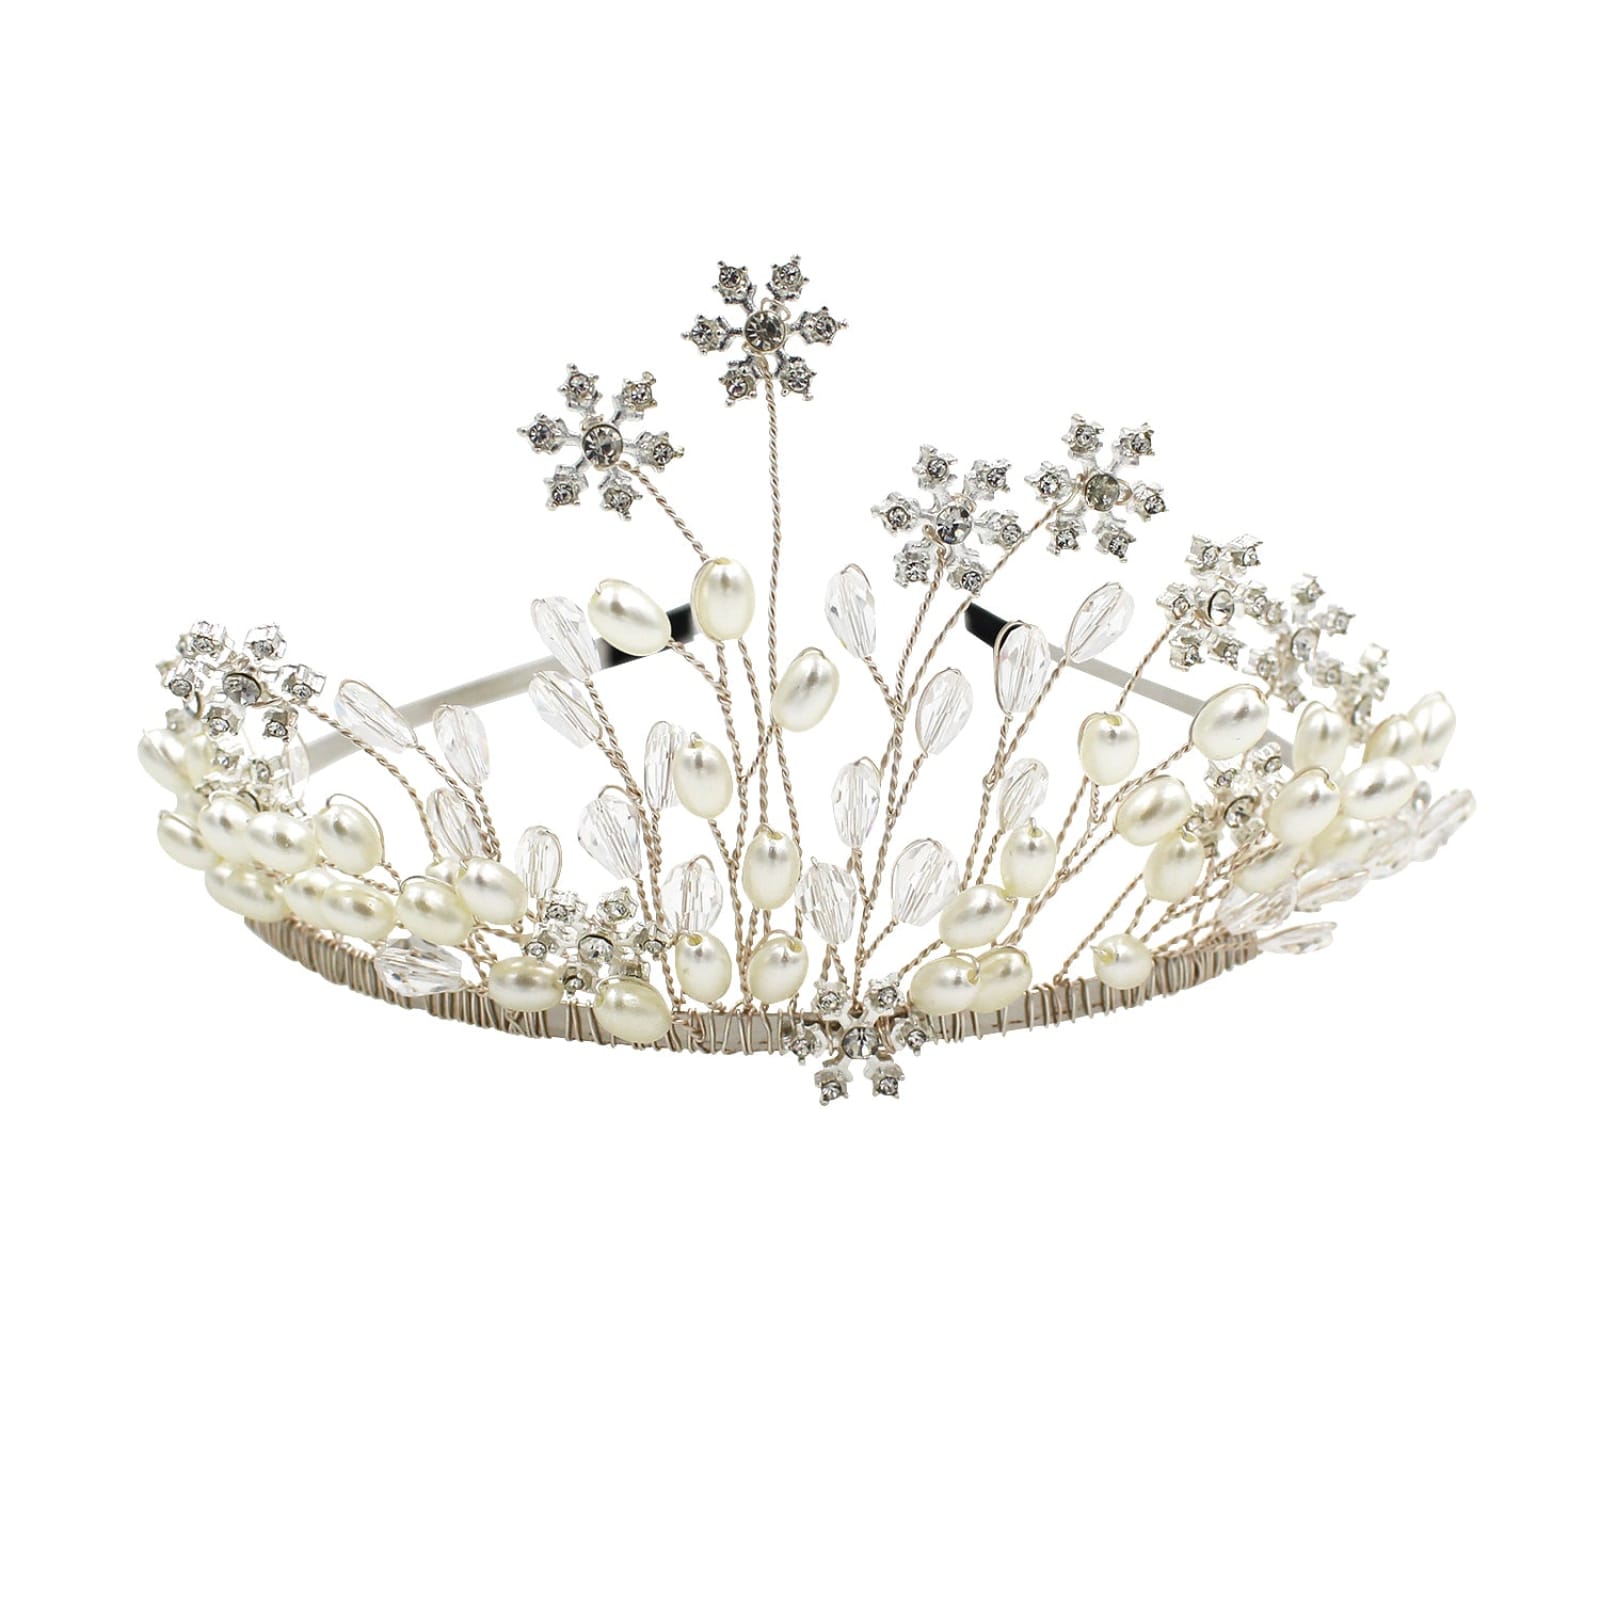 Bride Crown Princess Silver Pearls Headwear Wedding Hair Jewelry Vintage Headpieces